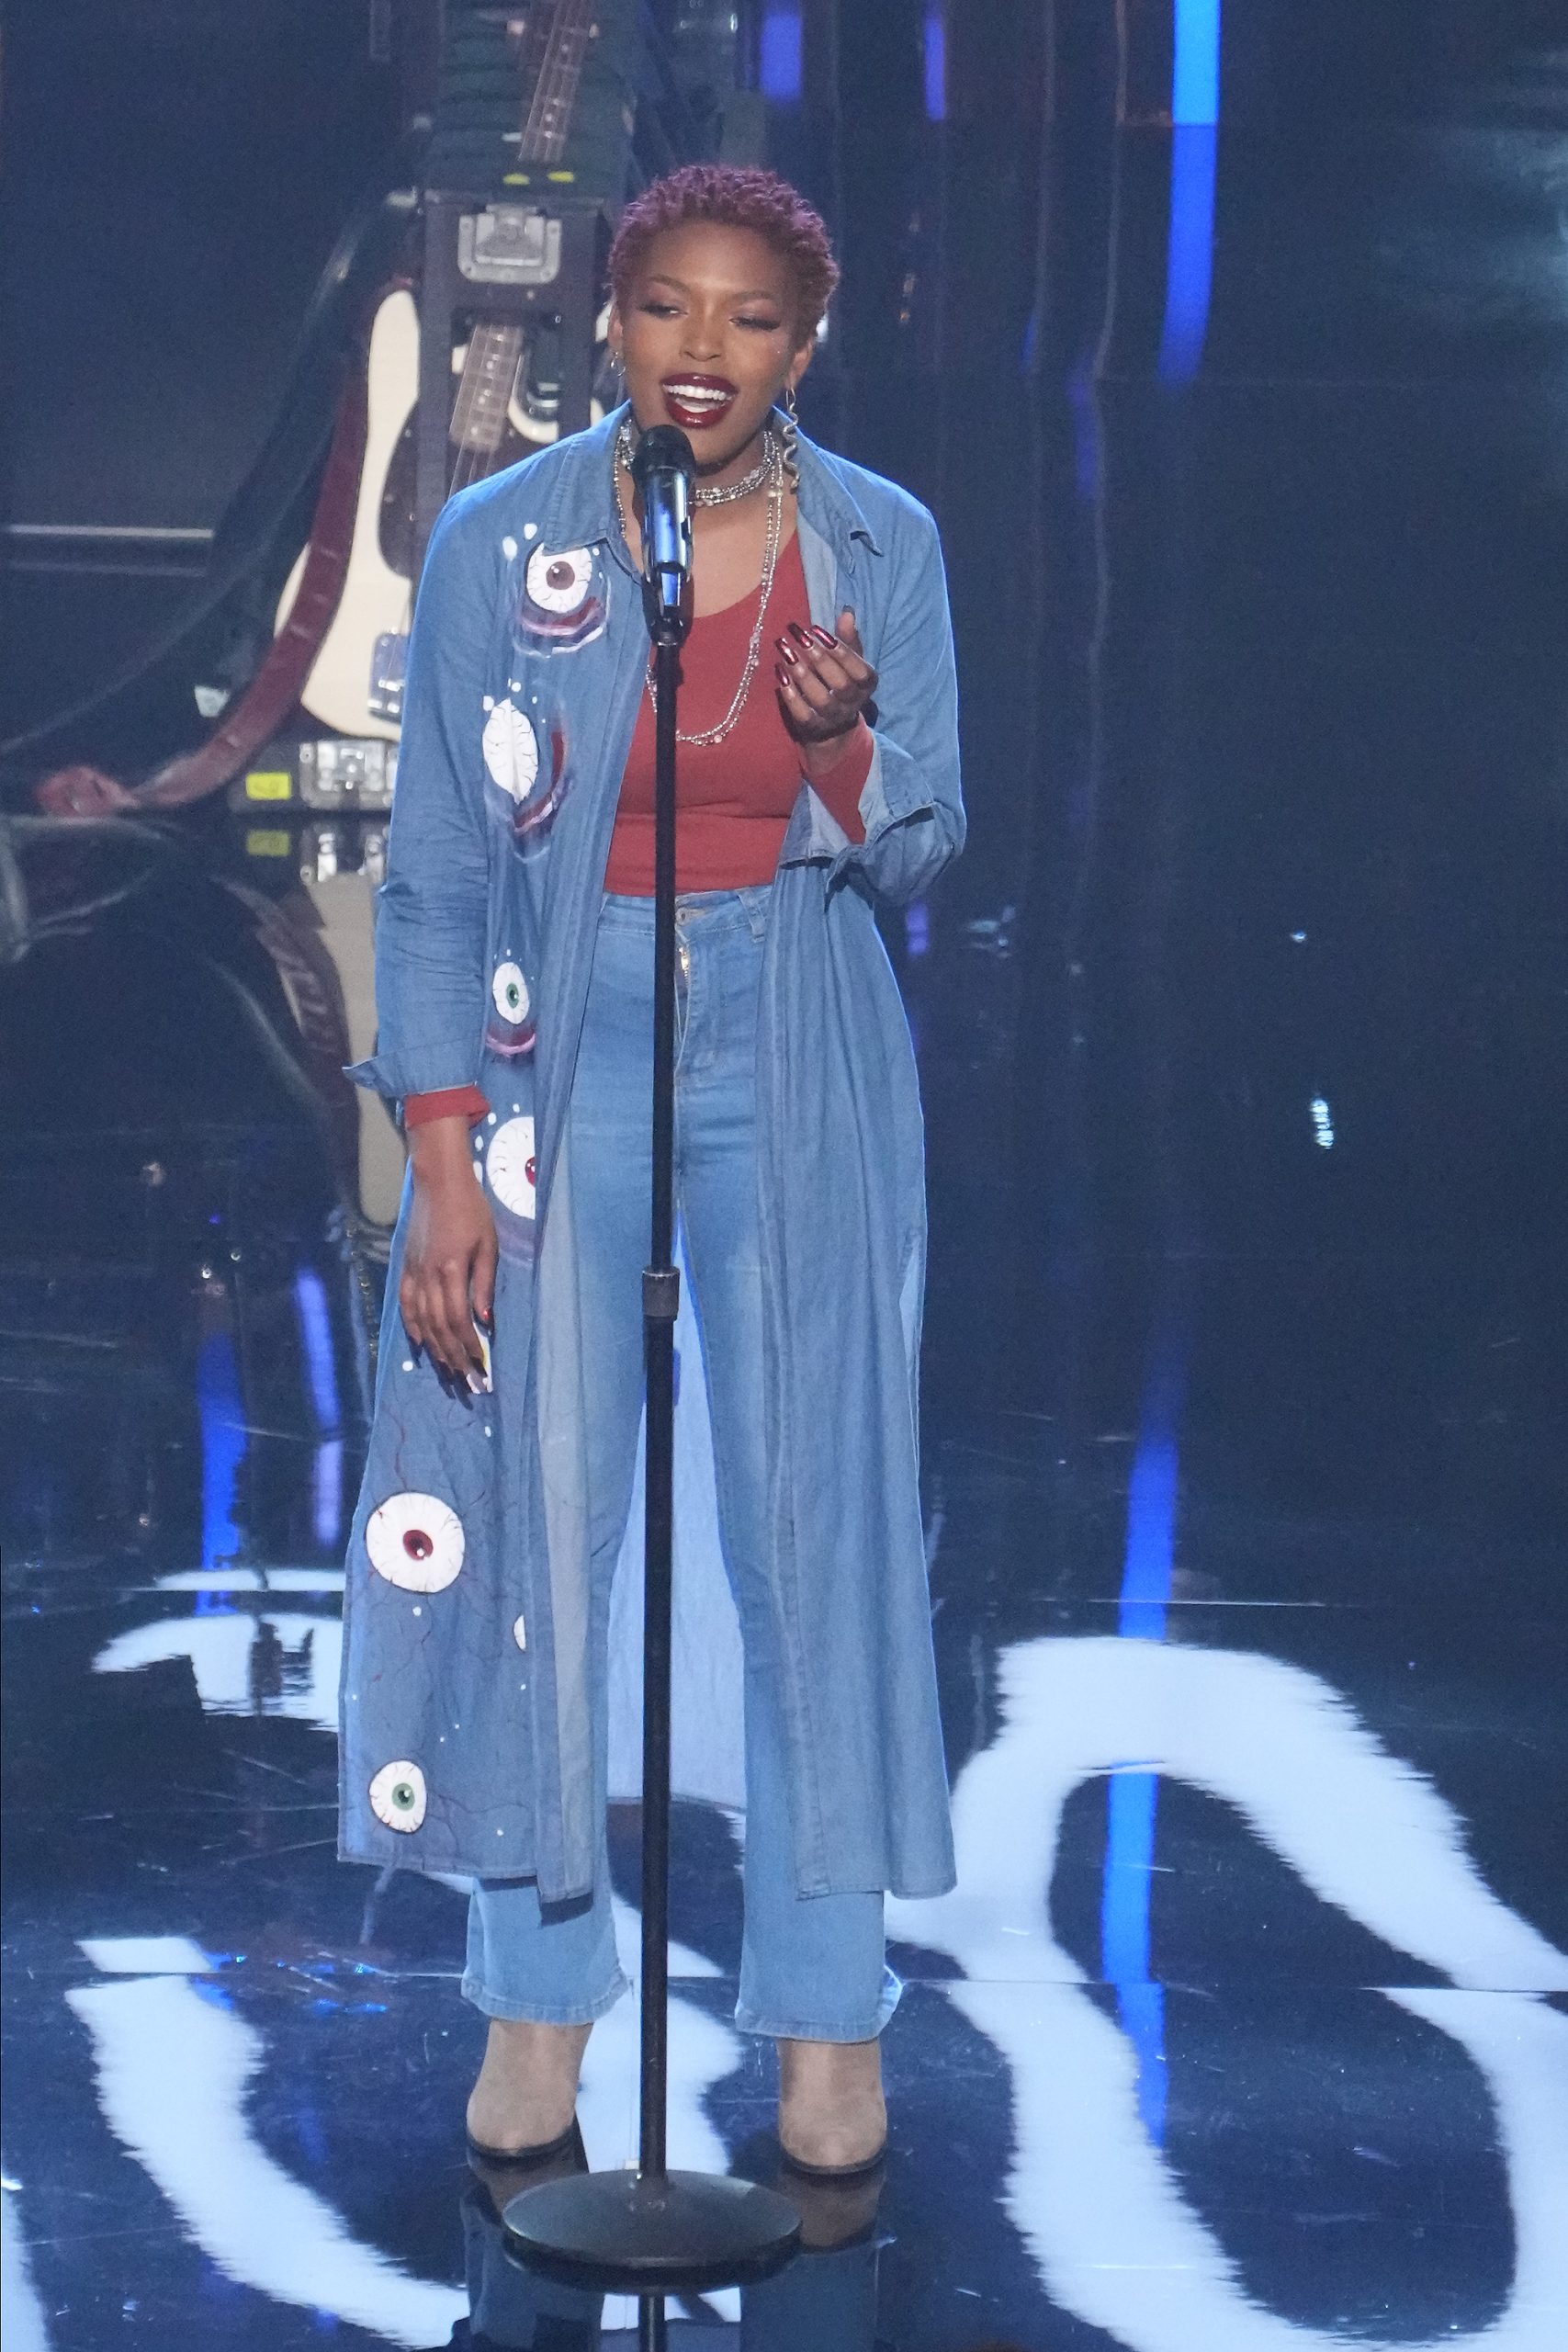 NAILYAH SERENITY on American Idol